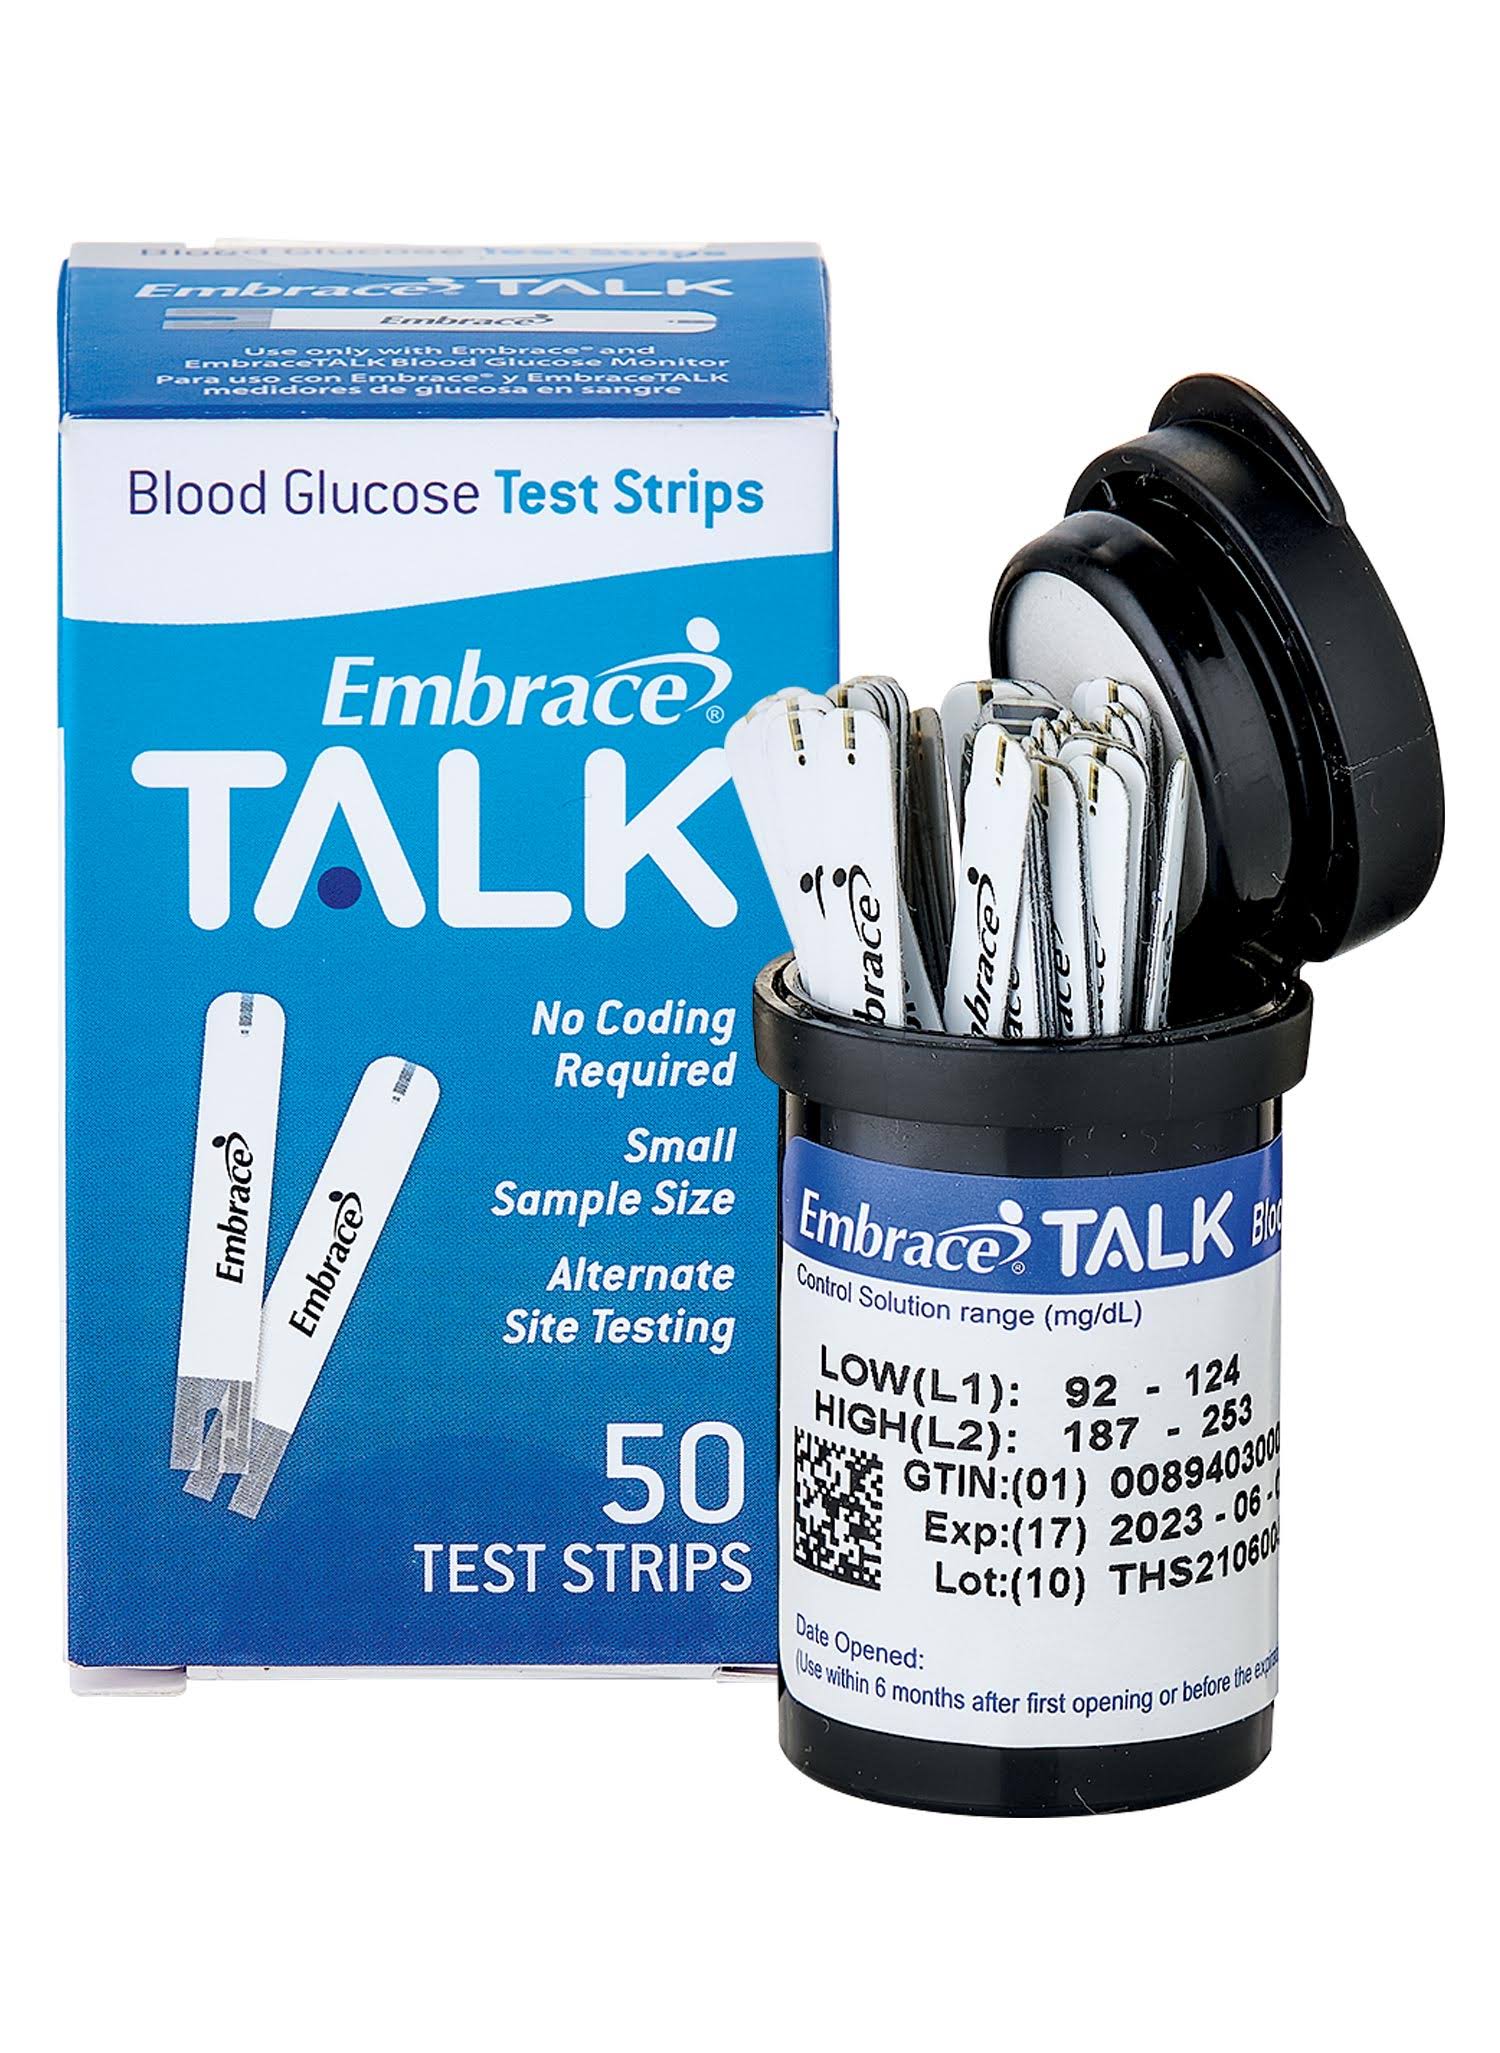 Embrace Talk Blood Glucose Test Strips 50ct